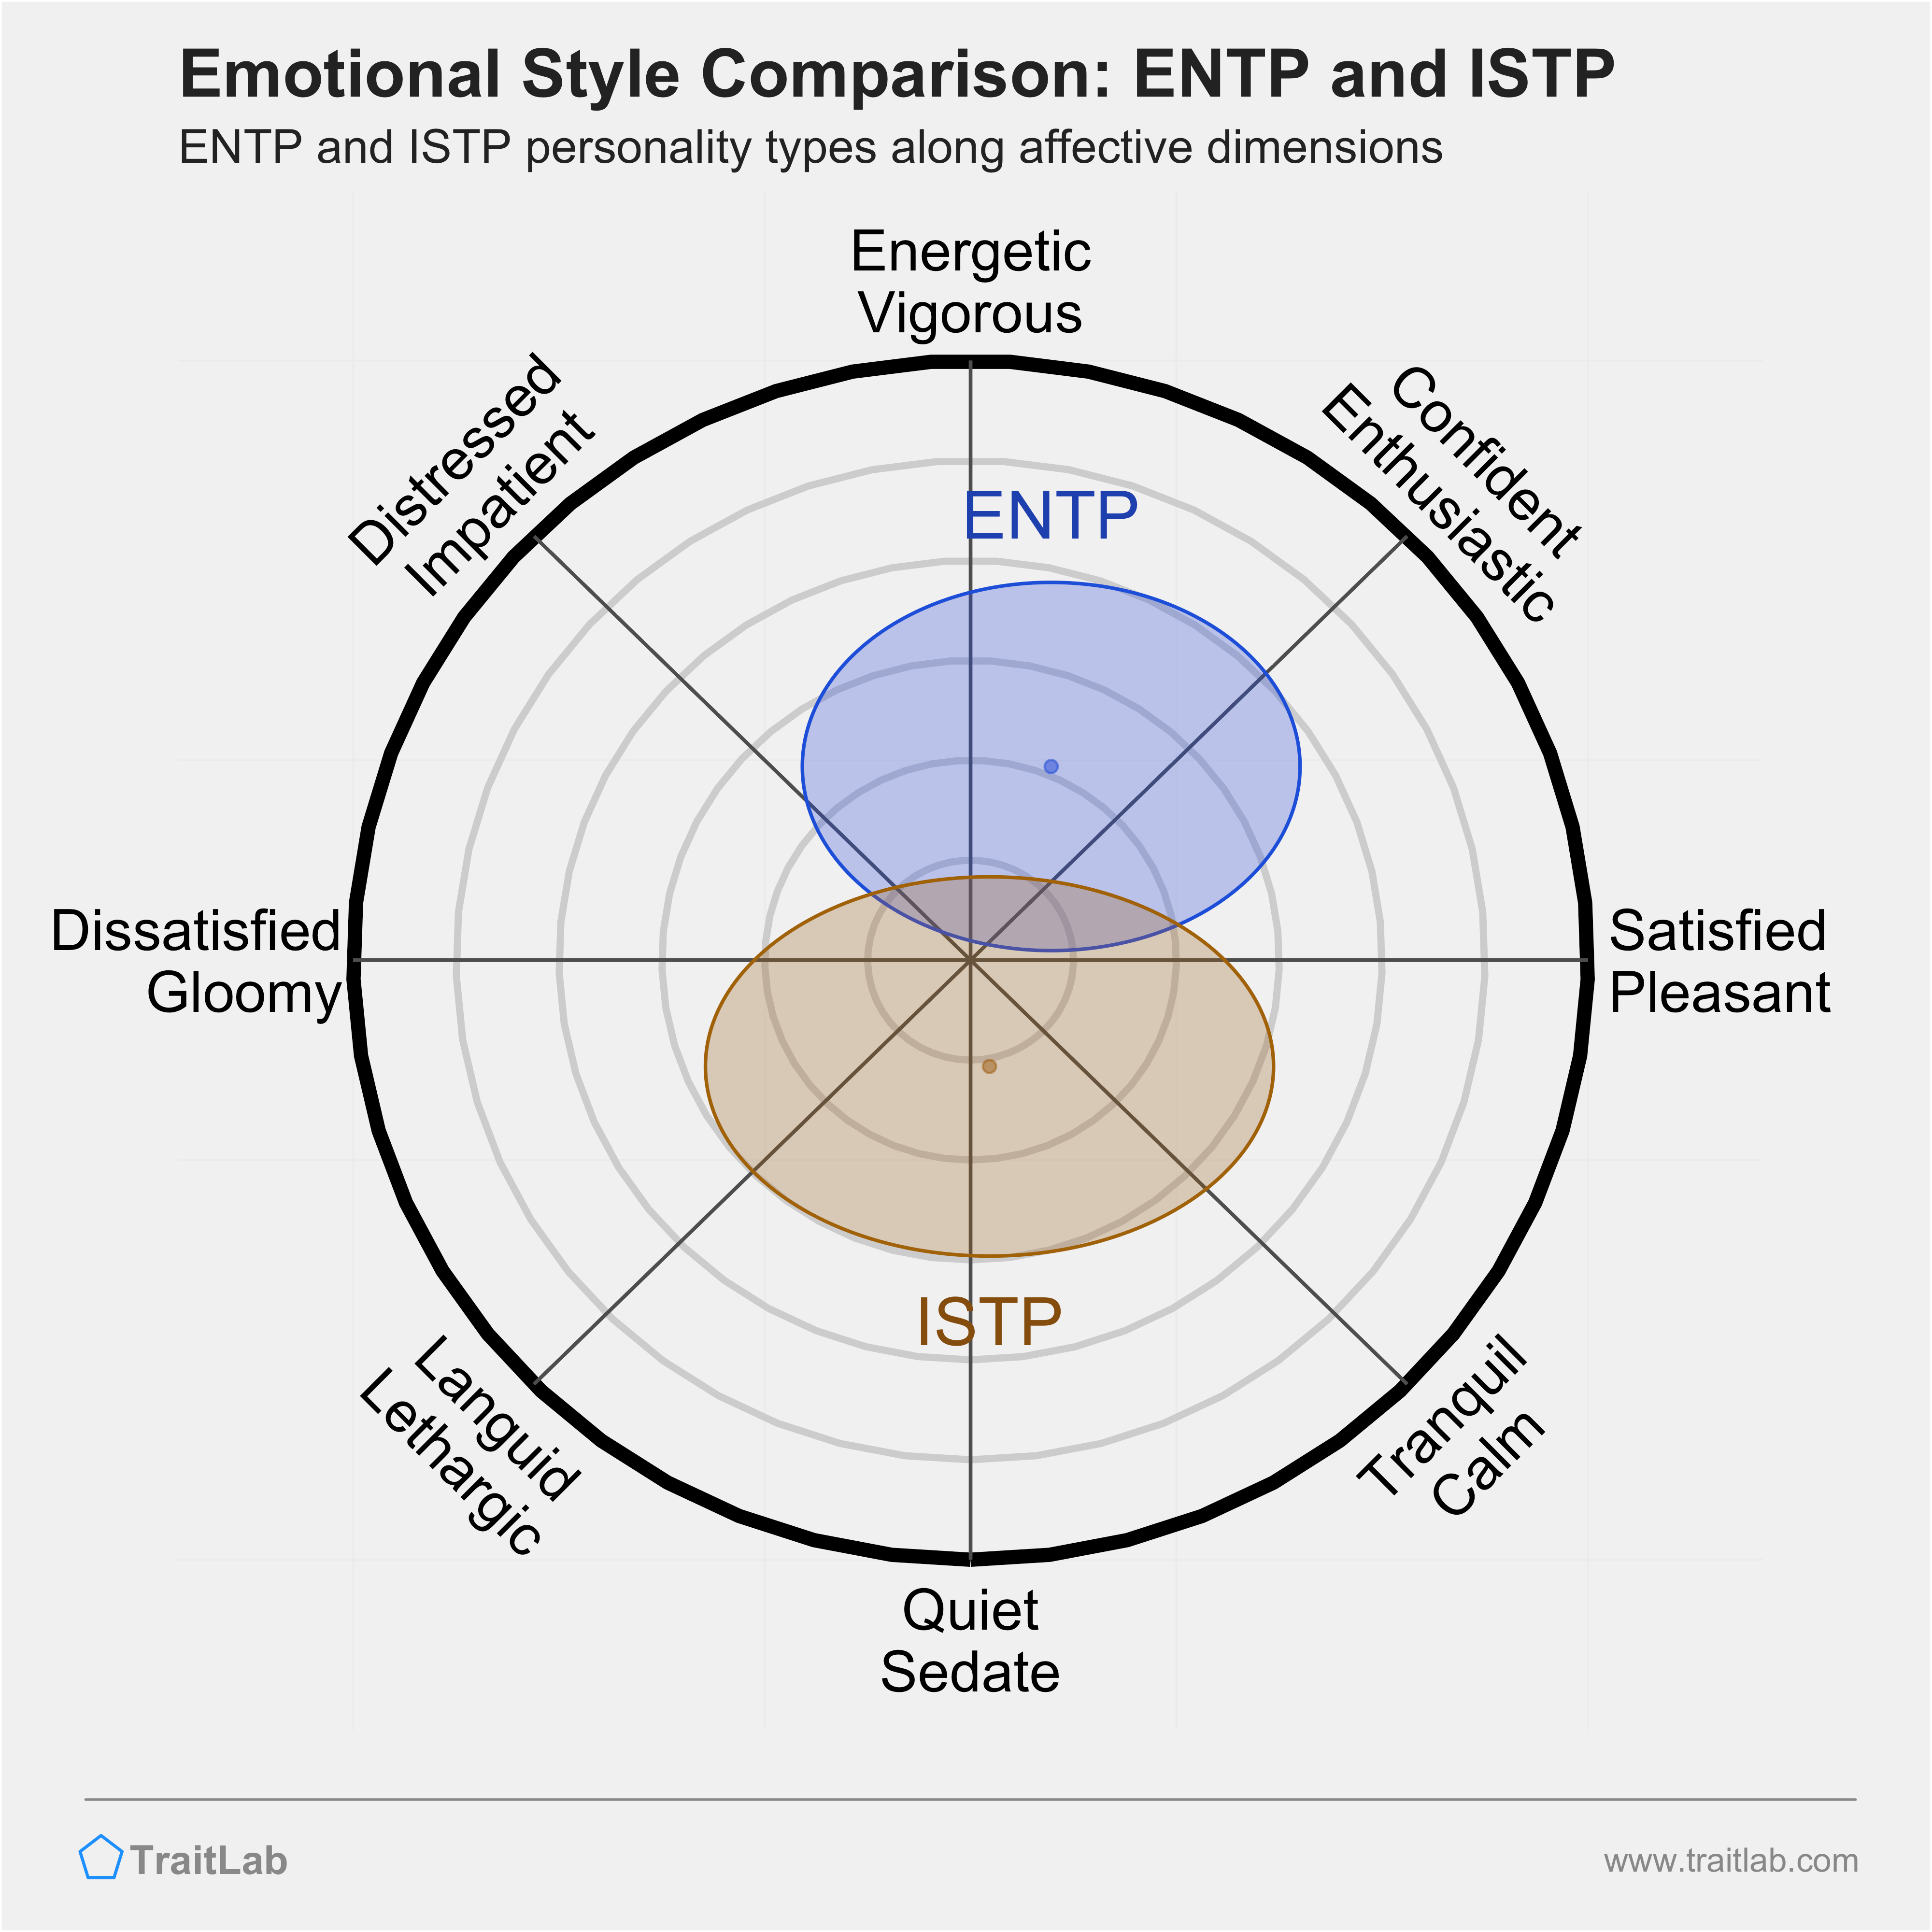 ENTP and ISTP comparison across emotional (affective) dimensions